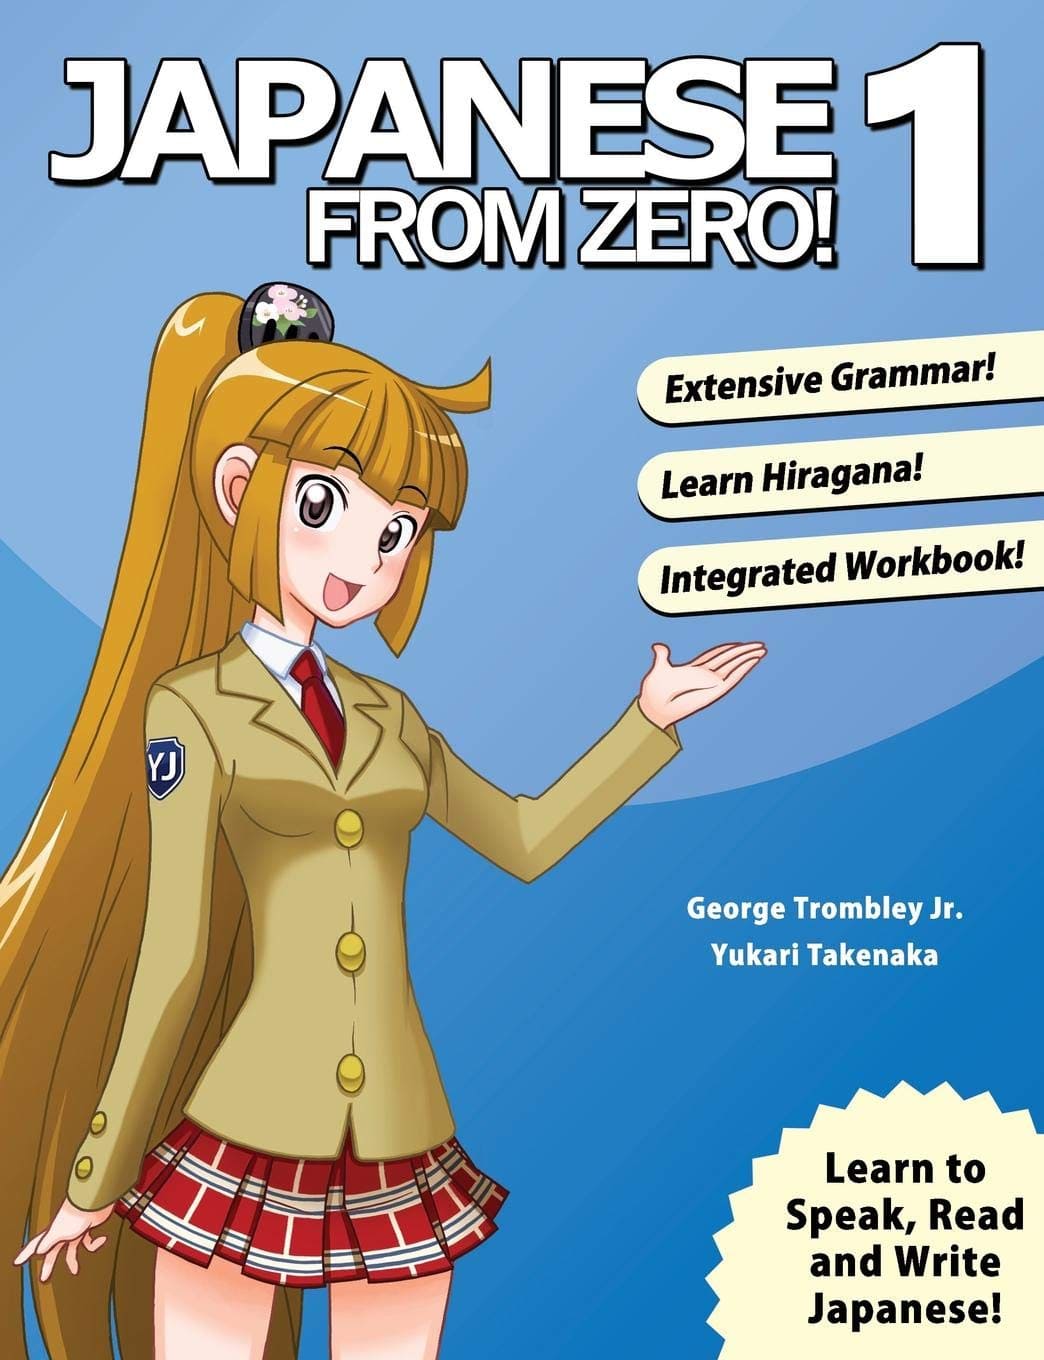 Aprender japonés con Japanese From Zero!